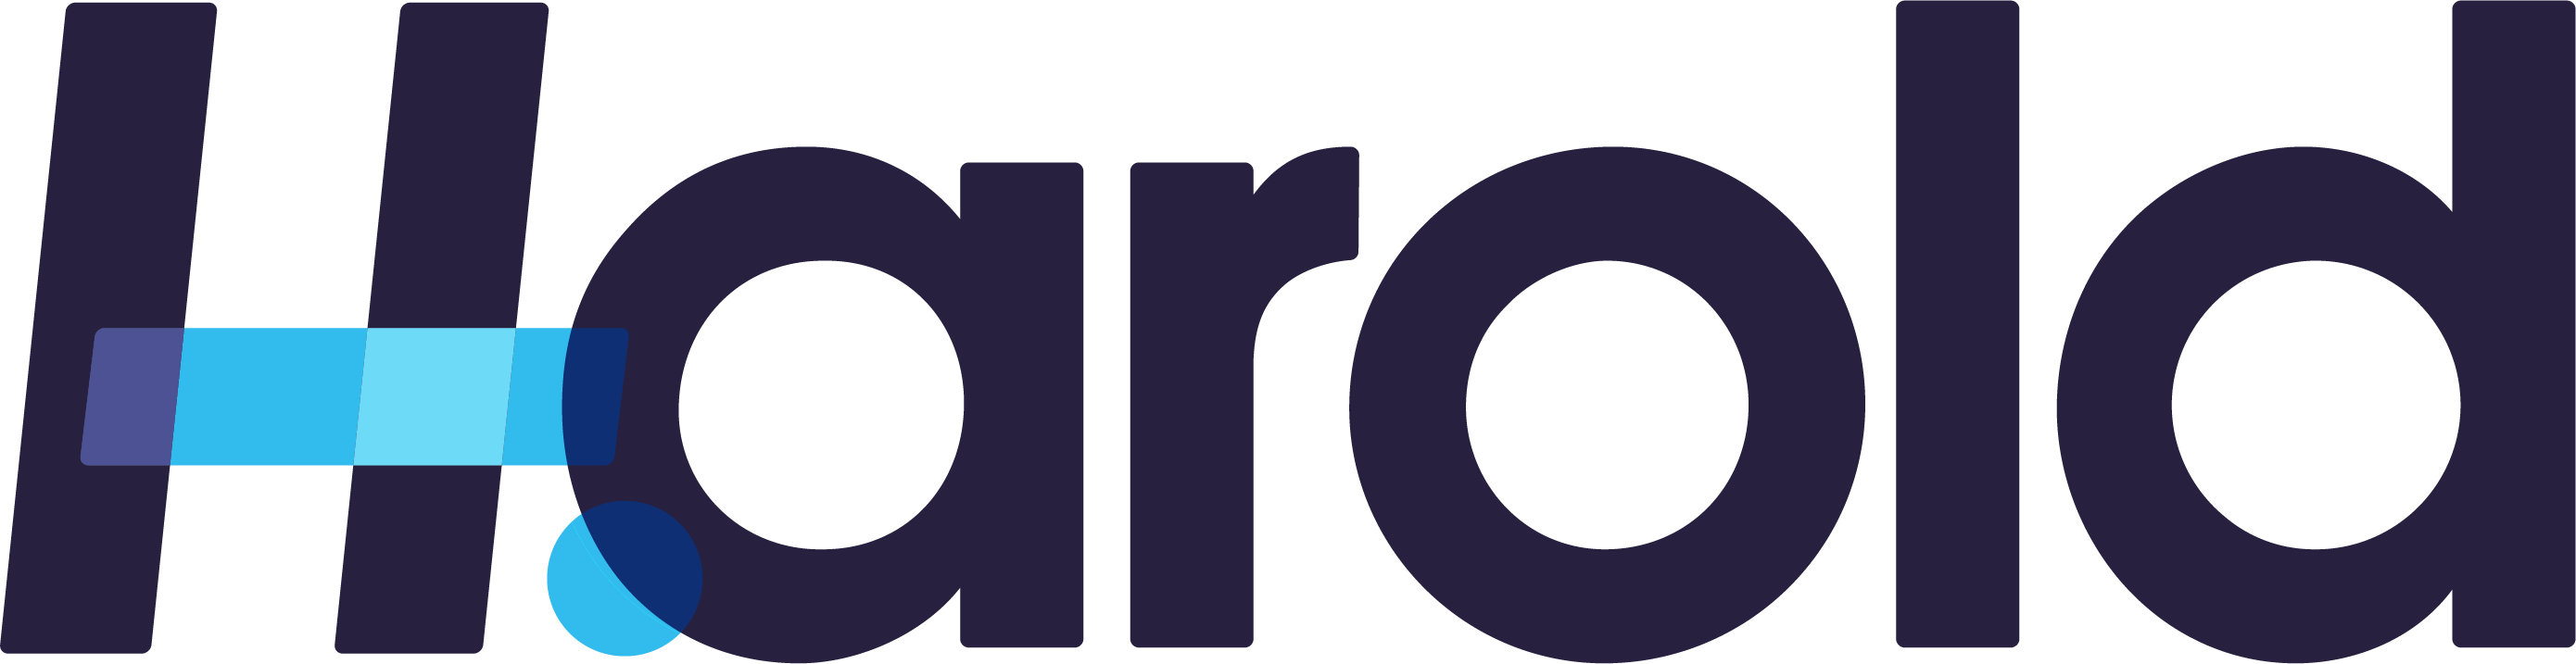 Harold logo harold